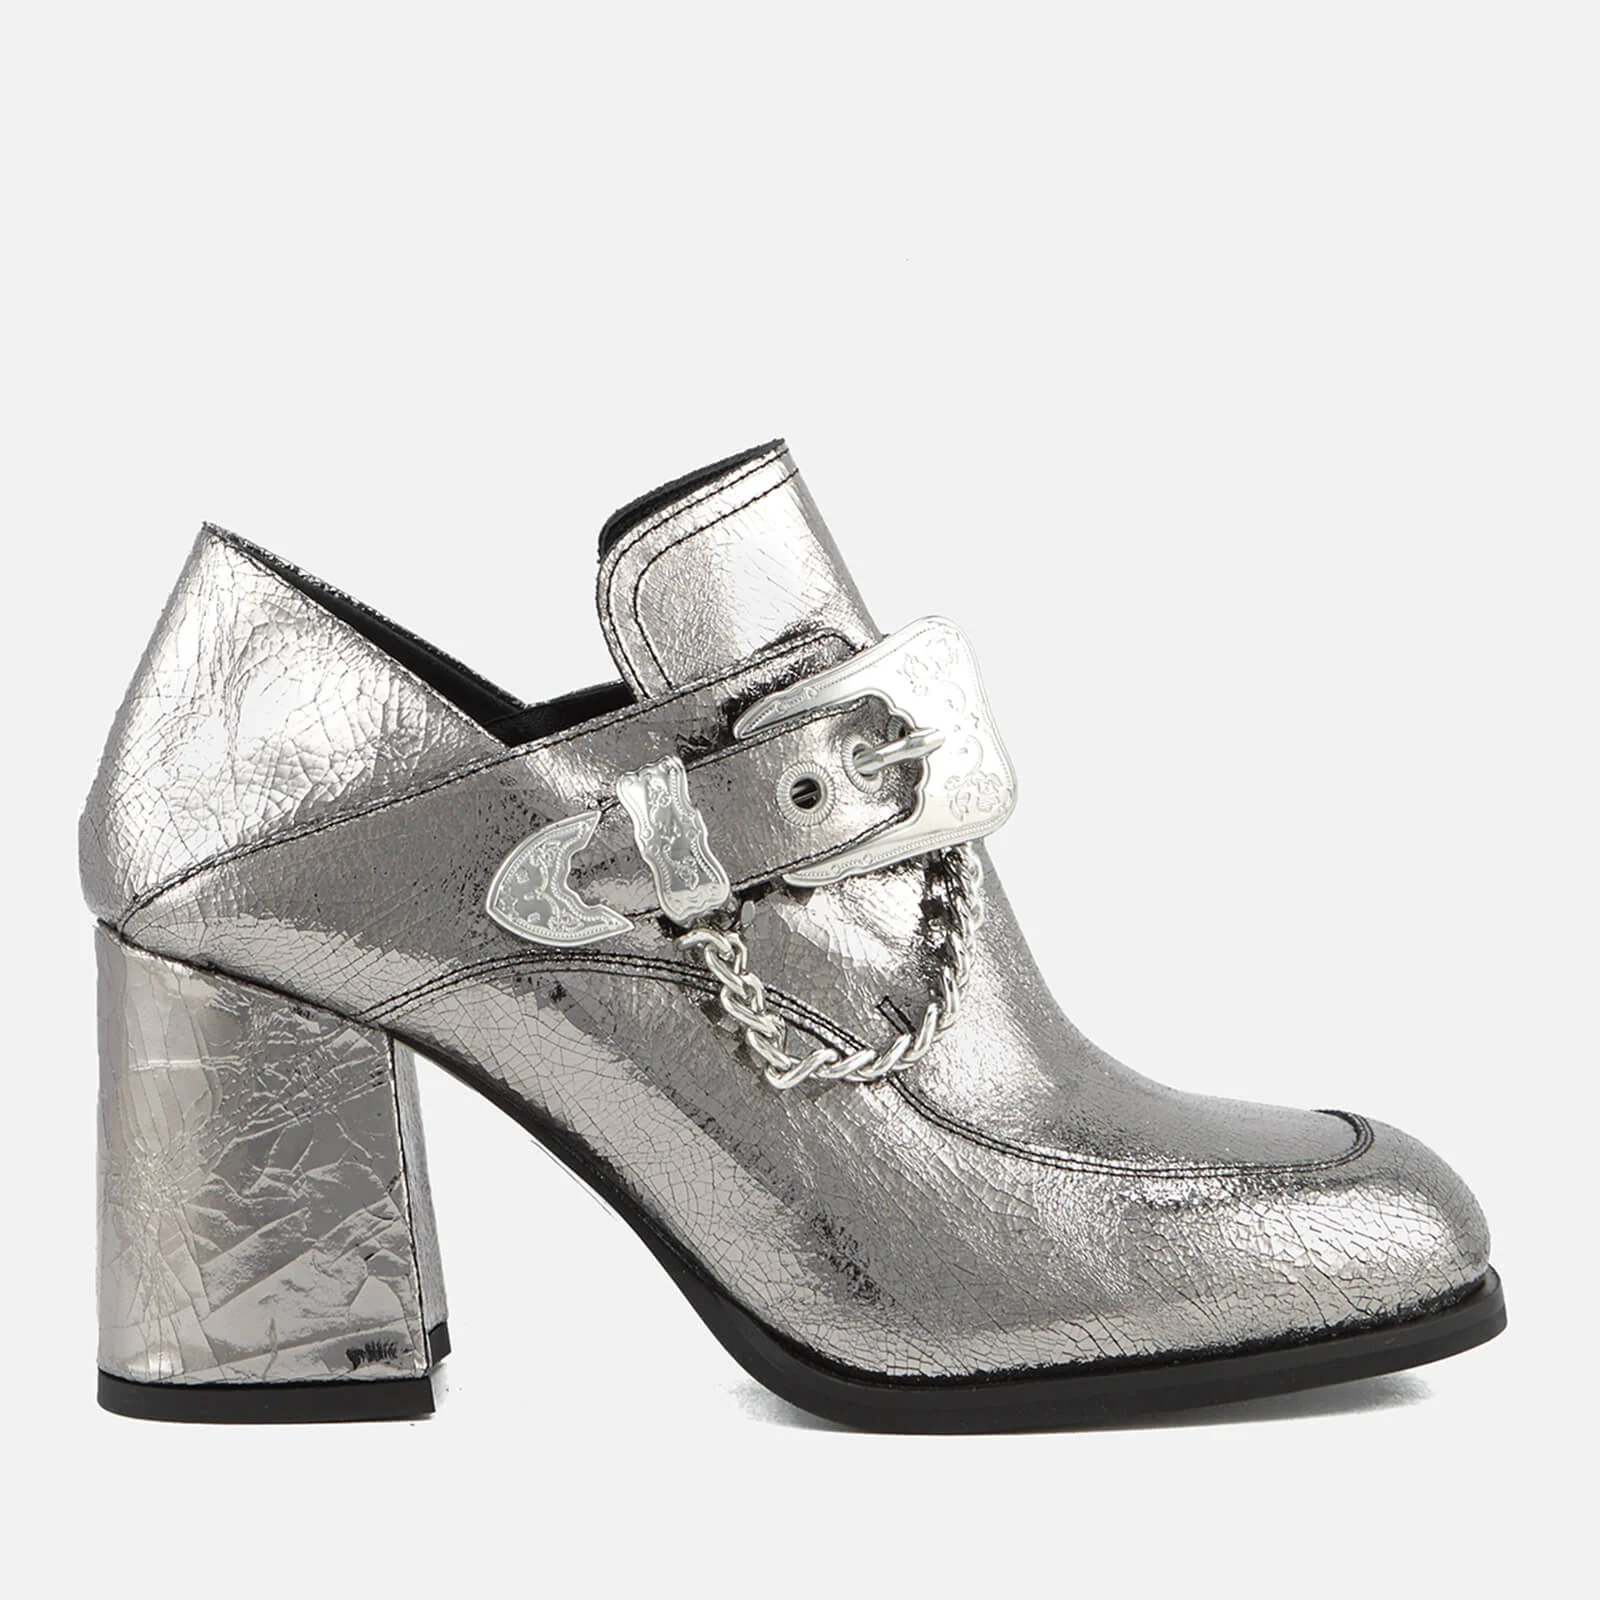 McQ Alexander McQueen Women's Leah Mocassin Heeled Shoes - Silver Image 1